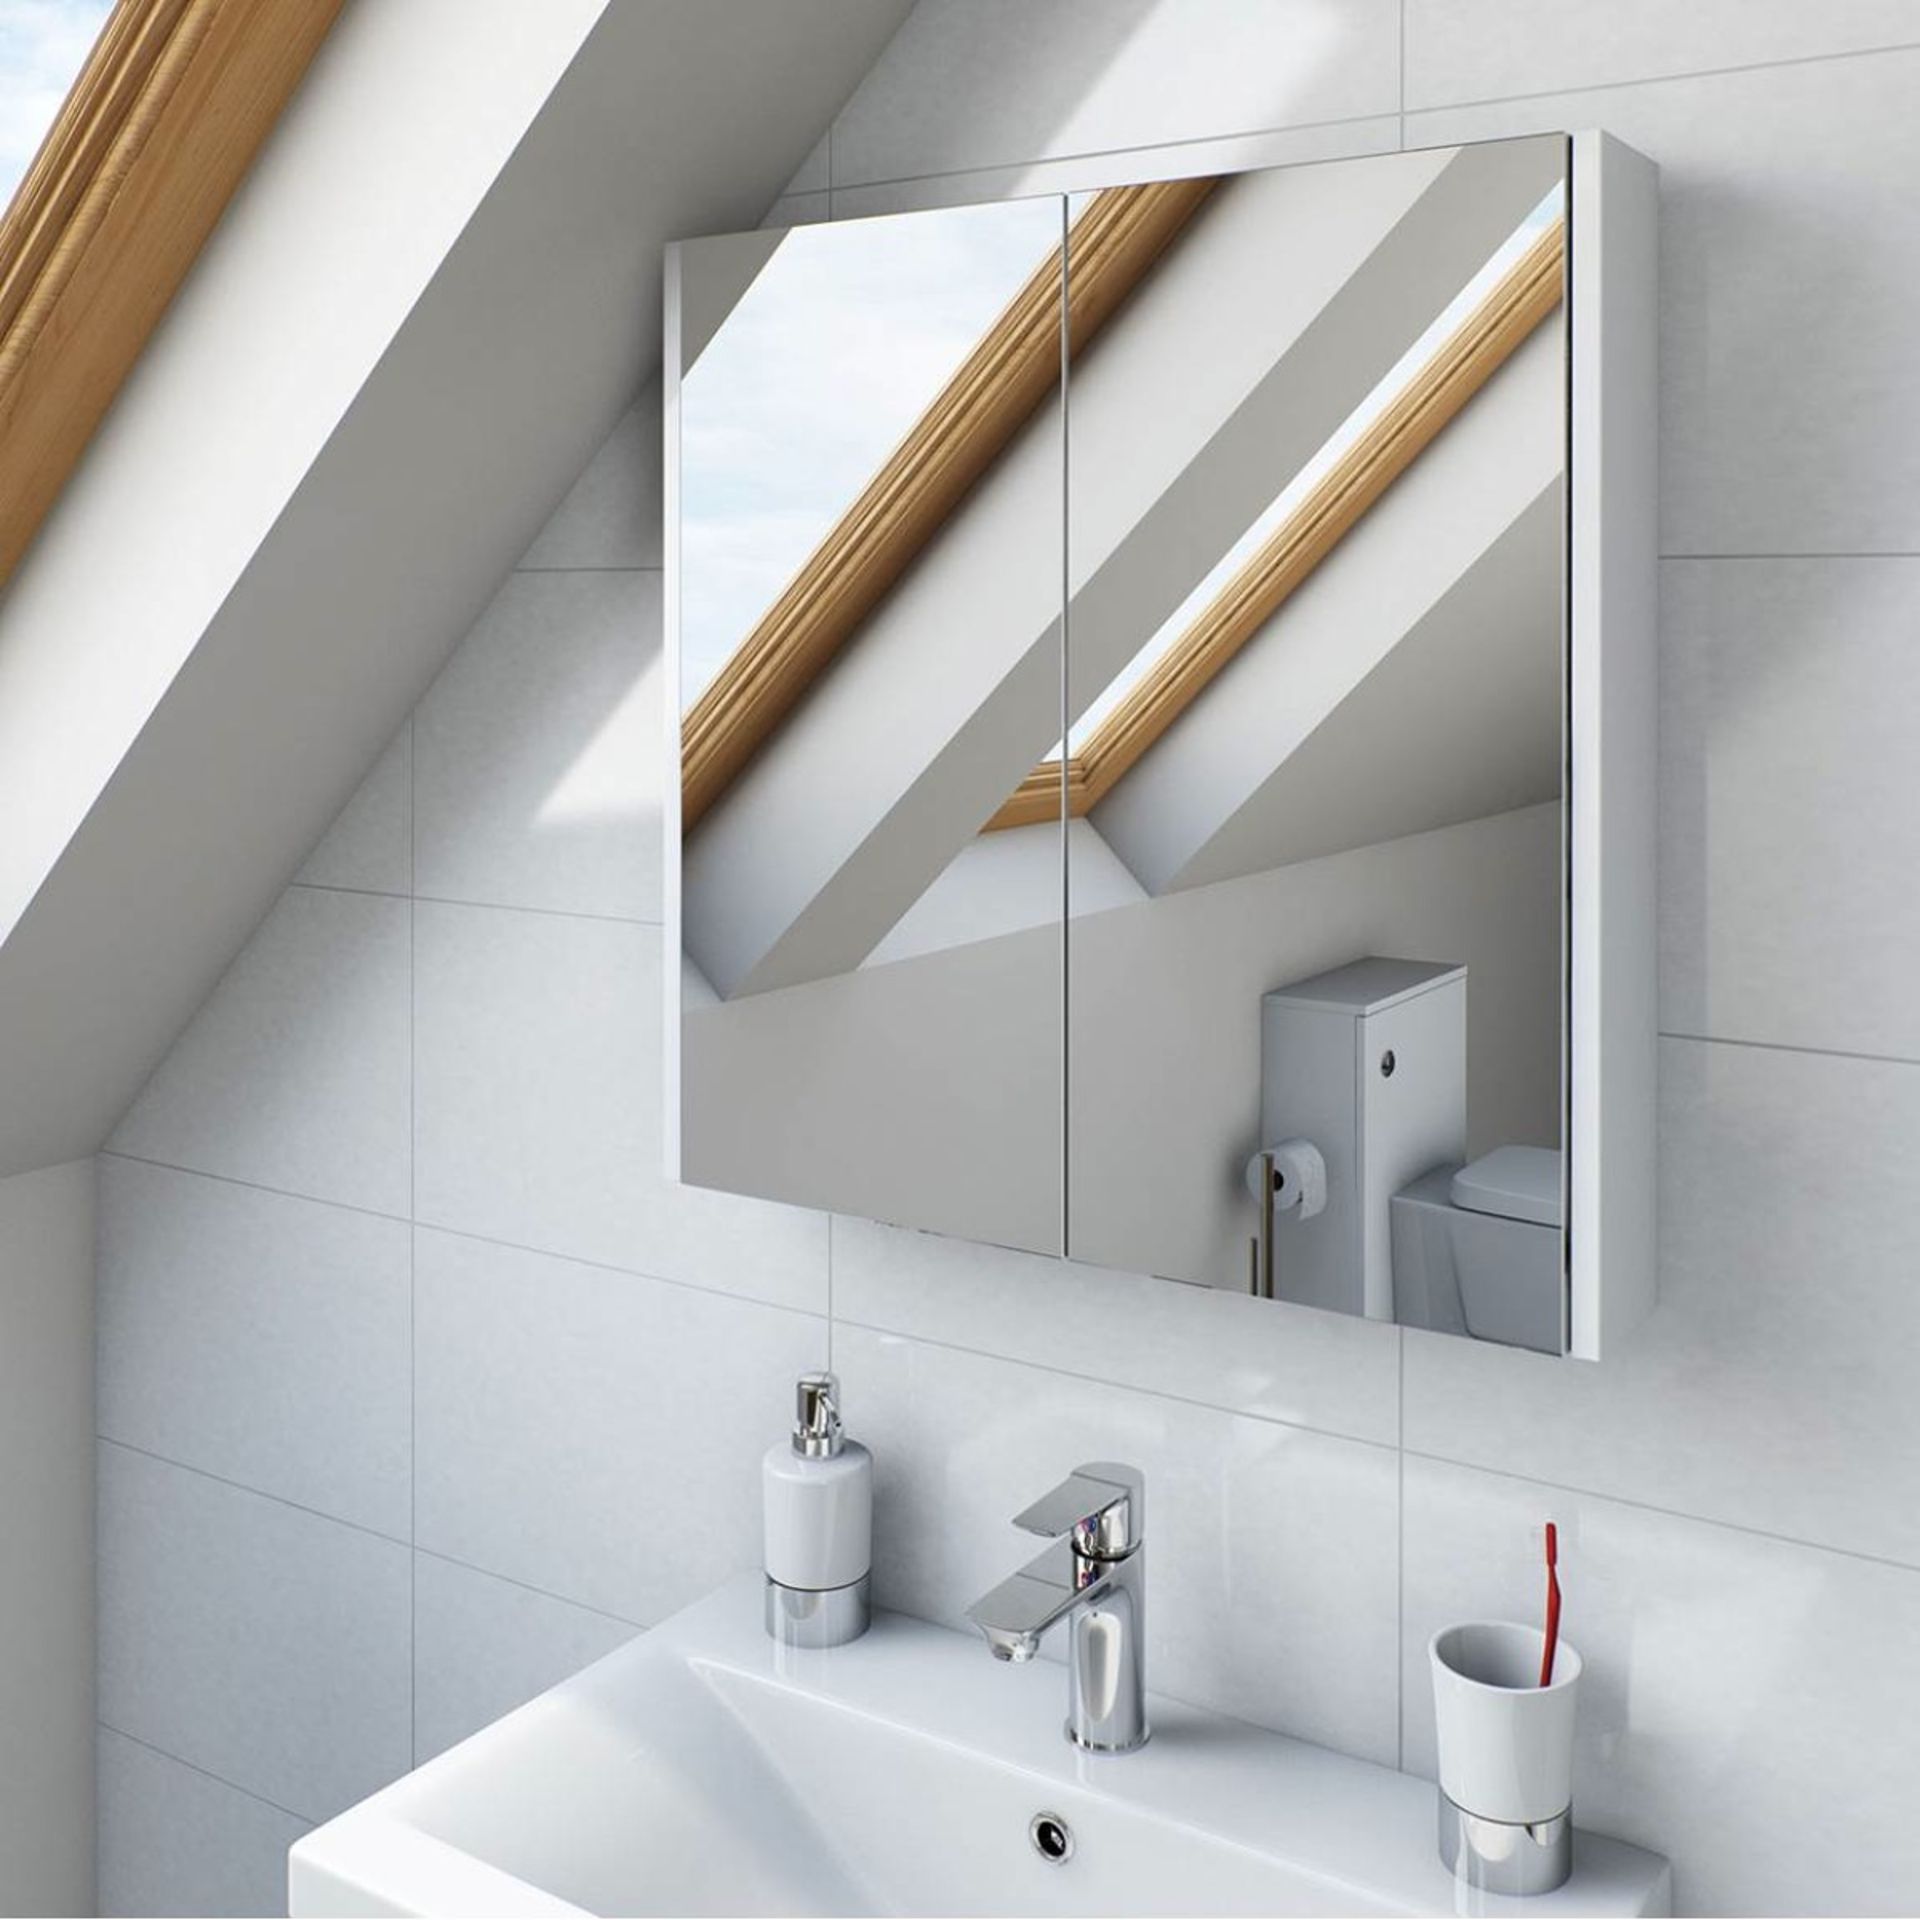 1 x Smart Plan White Mirrored Bathroom Cabinet -  Unused Stock - CL190 - Ref BOLT052 - H600 x W600 x